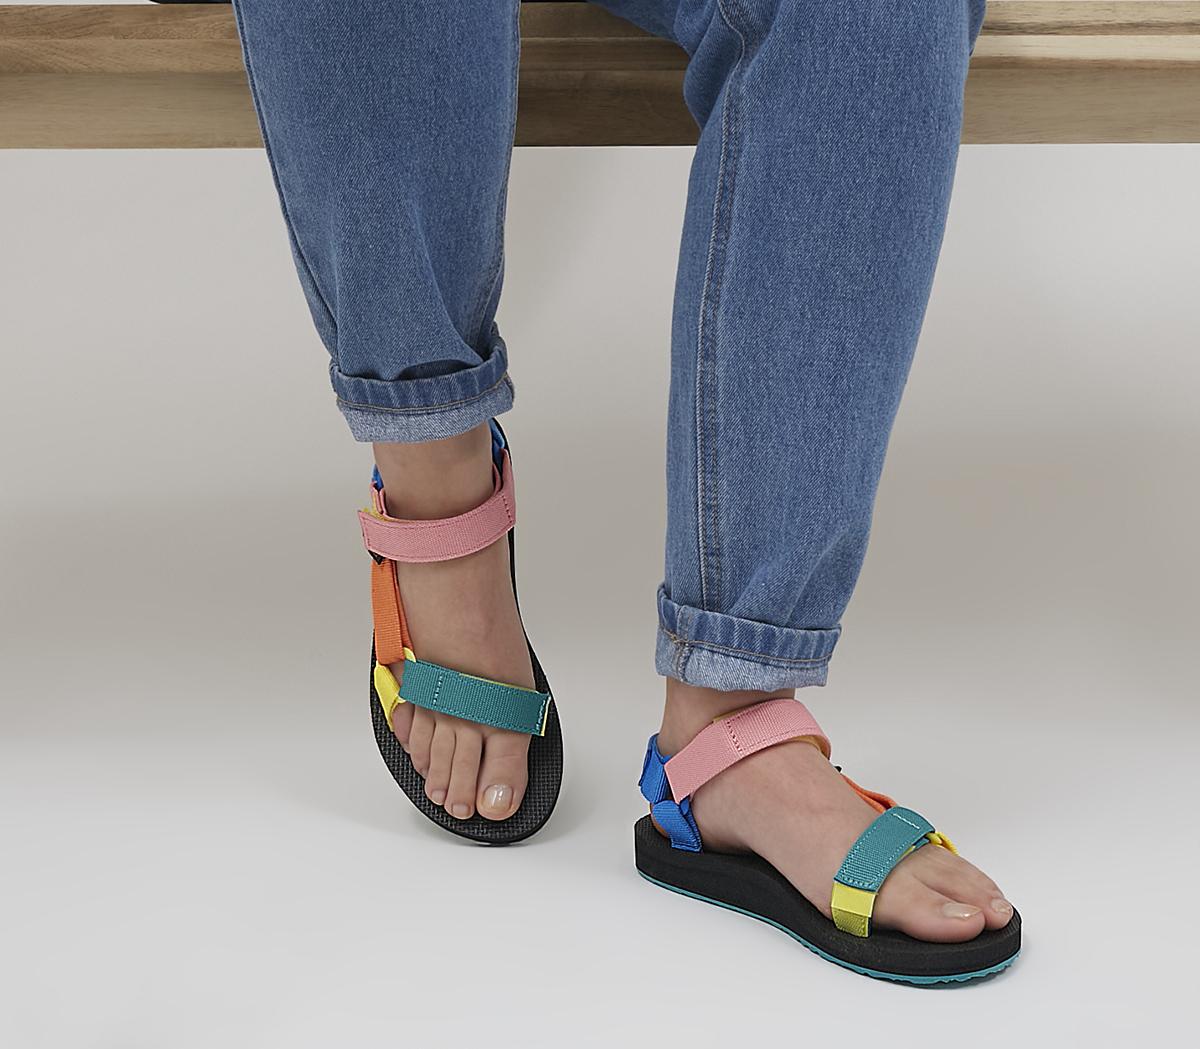 Teva Sandals Women's Size 6 Waterproof Leather Brown Shoes Adjustable  Hiking | eBay